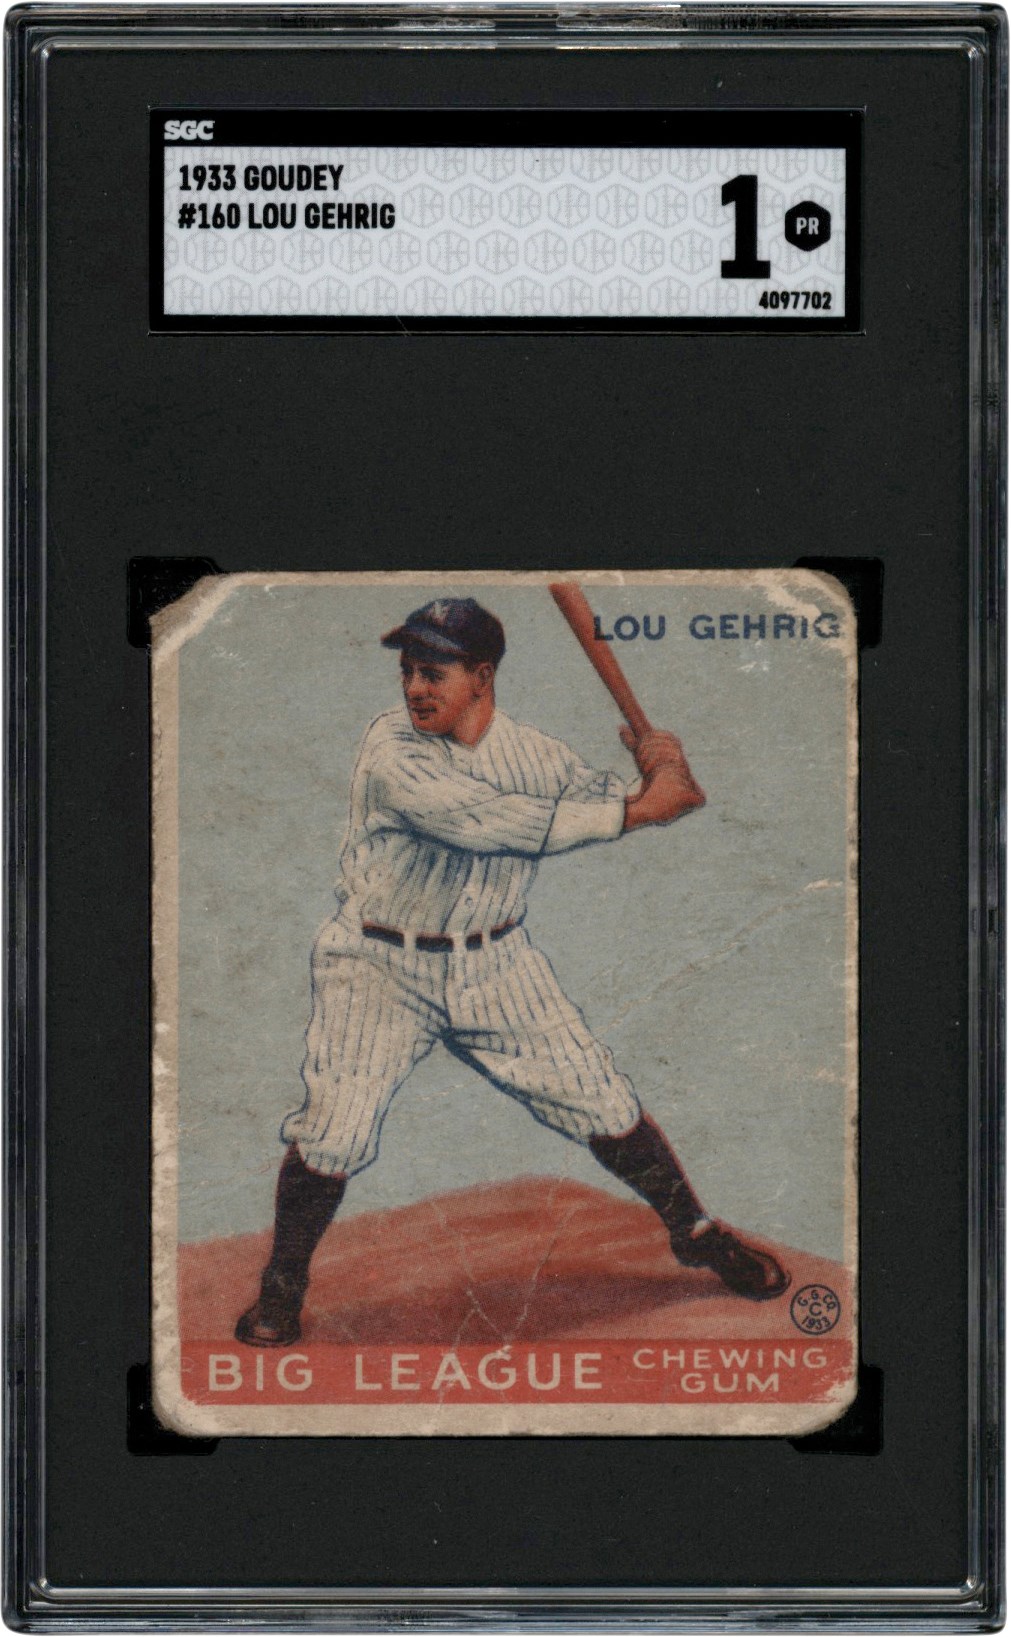 - 1933 Goudey Baseball #160 Lou Gehrig SGC PR 1